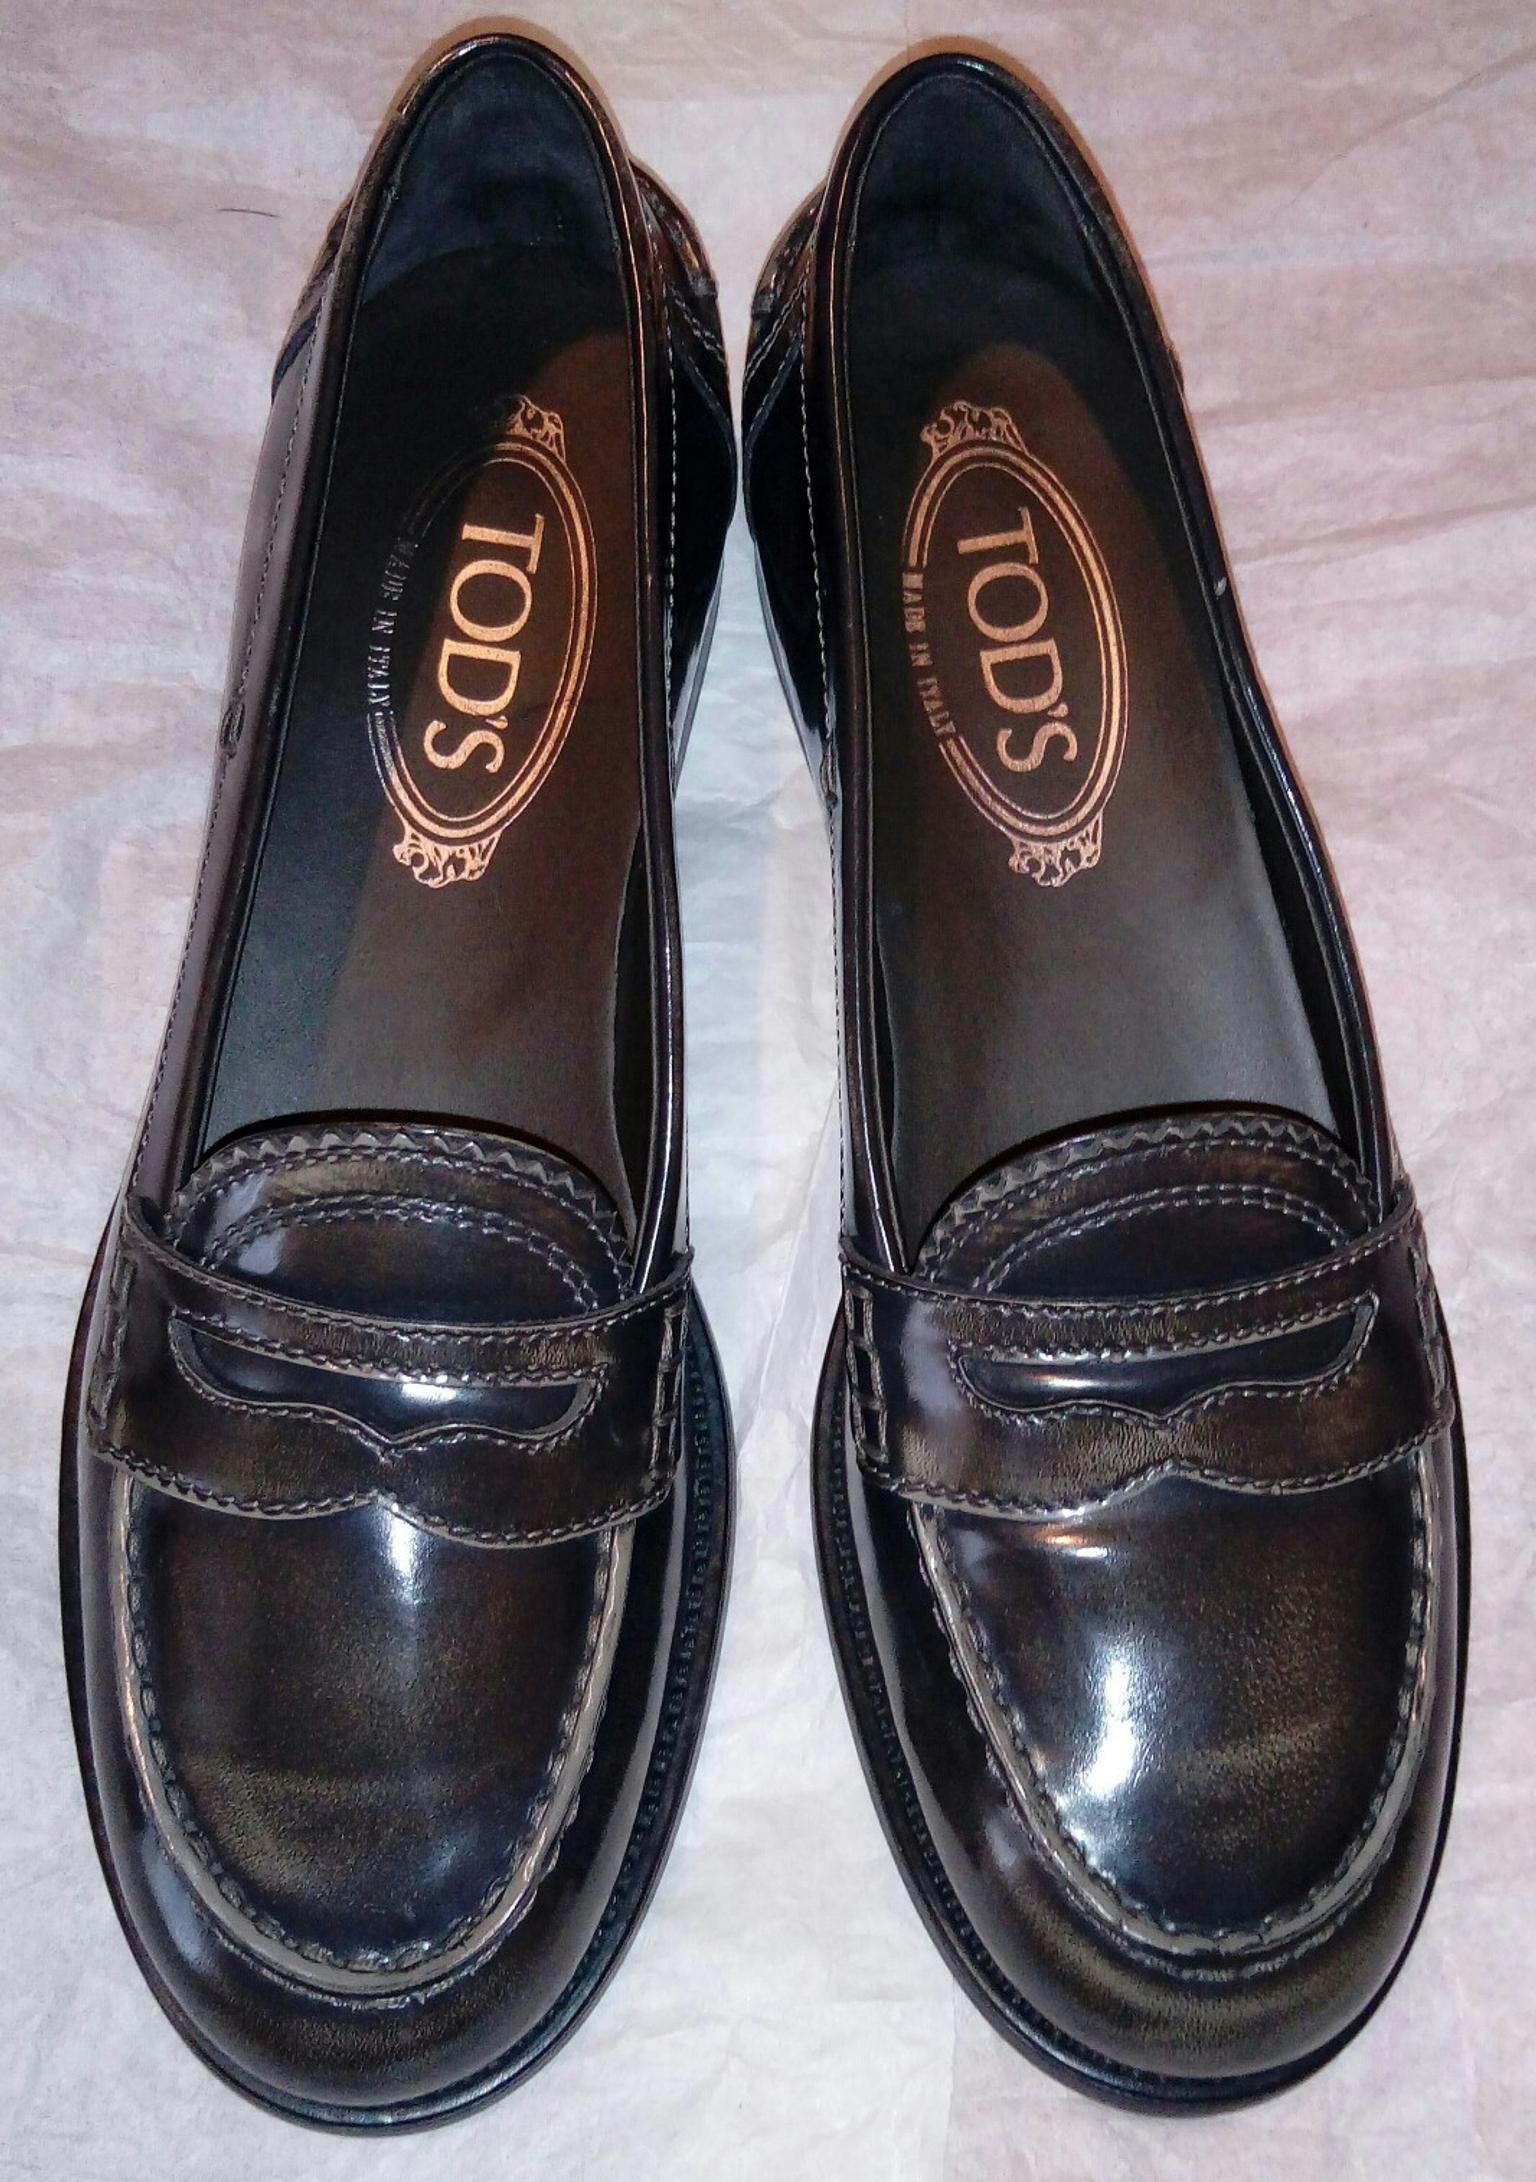 tods scarpe donna 2019